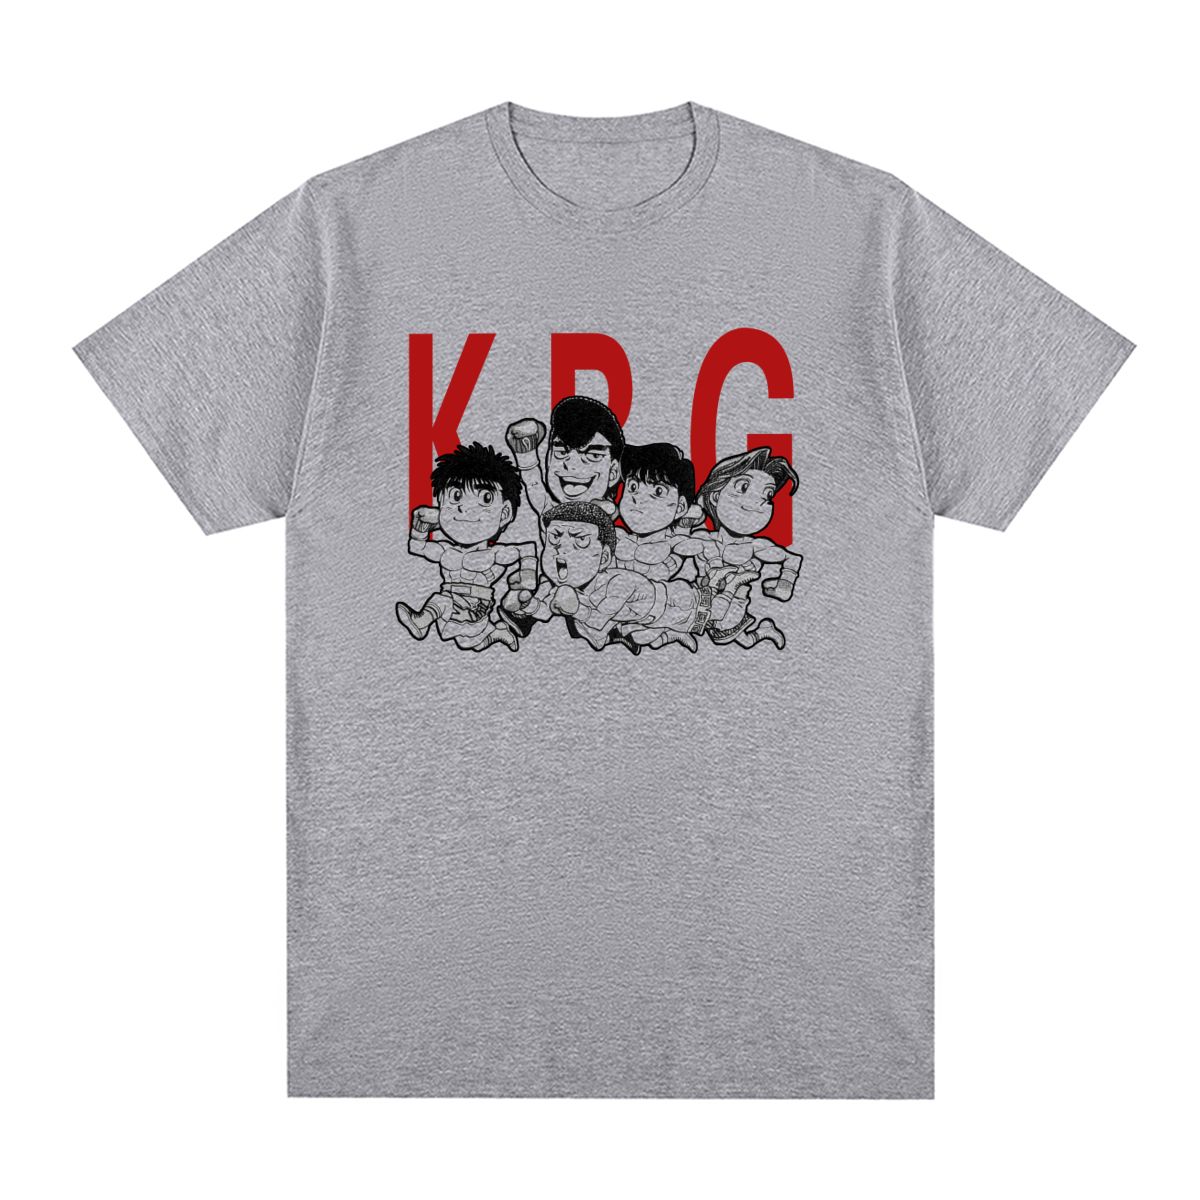 KBG T-Shirt